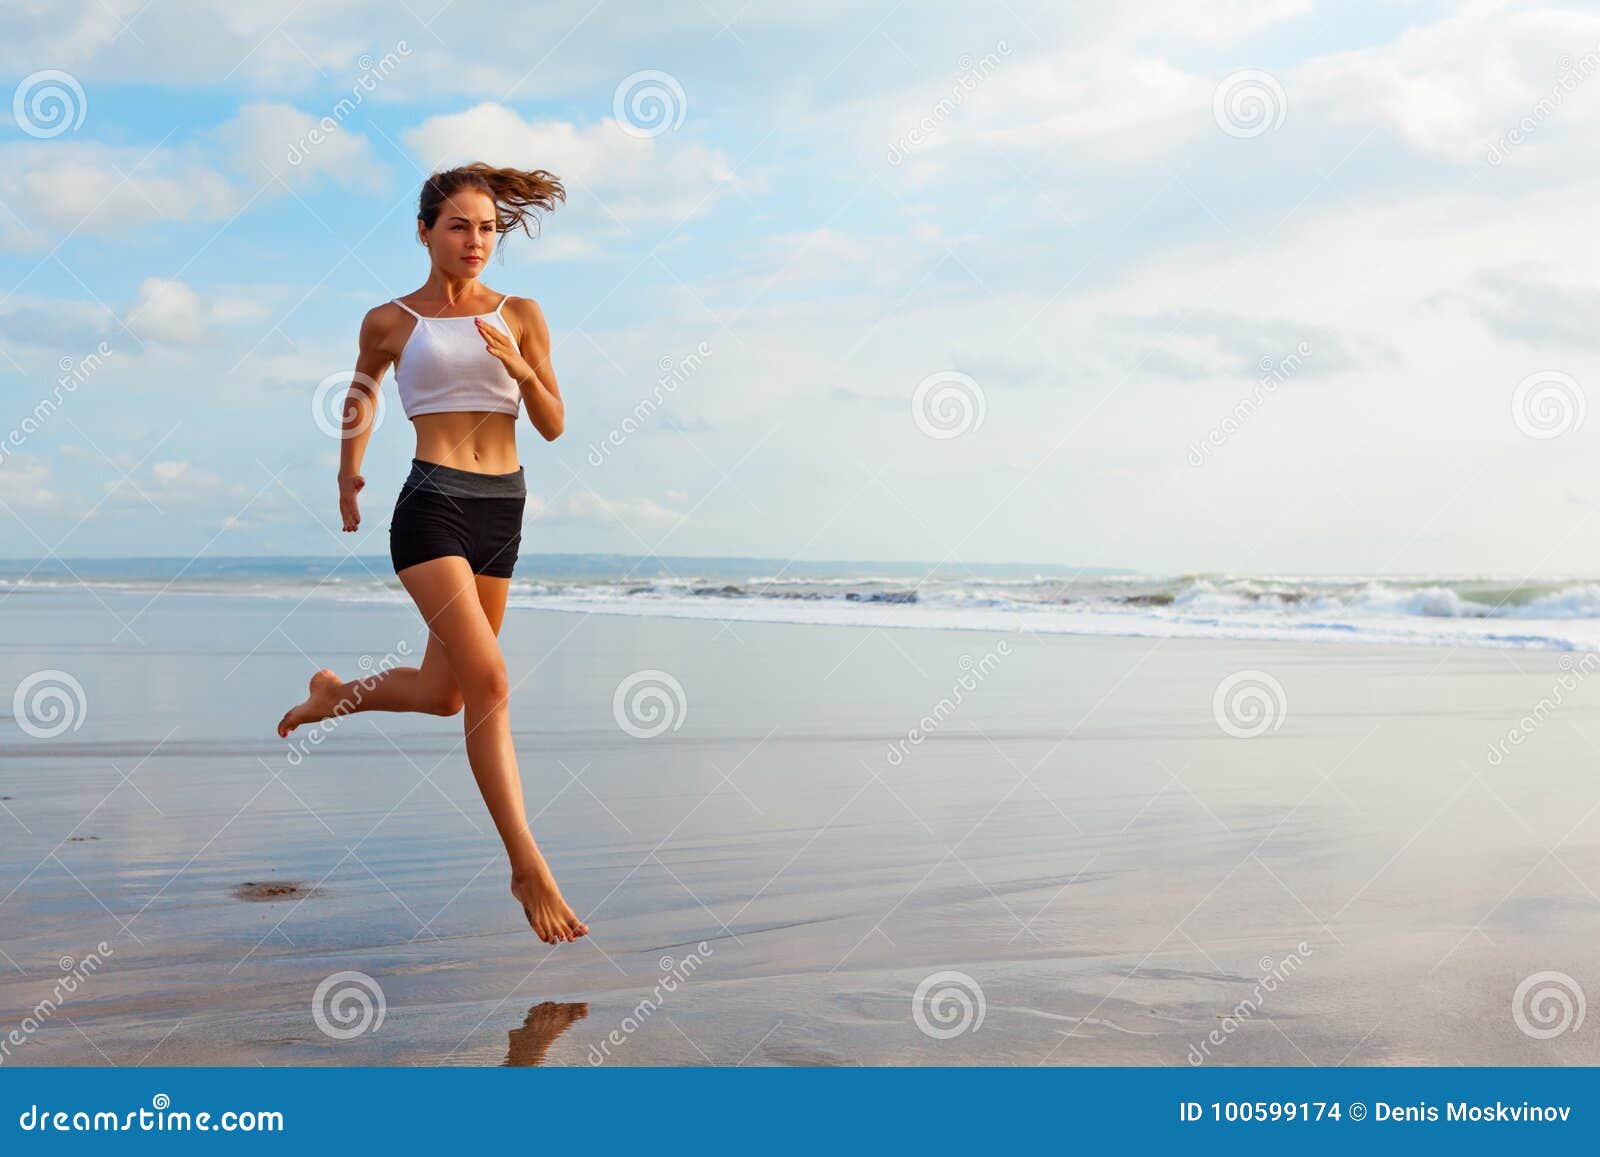 sporty girl running by beach along sea surf